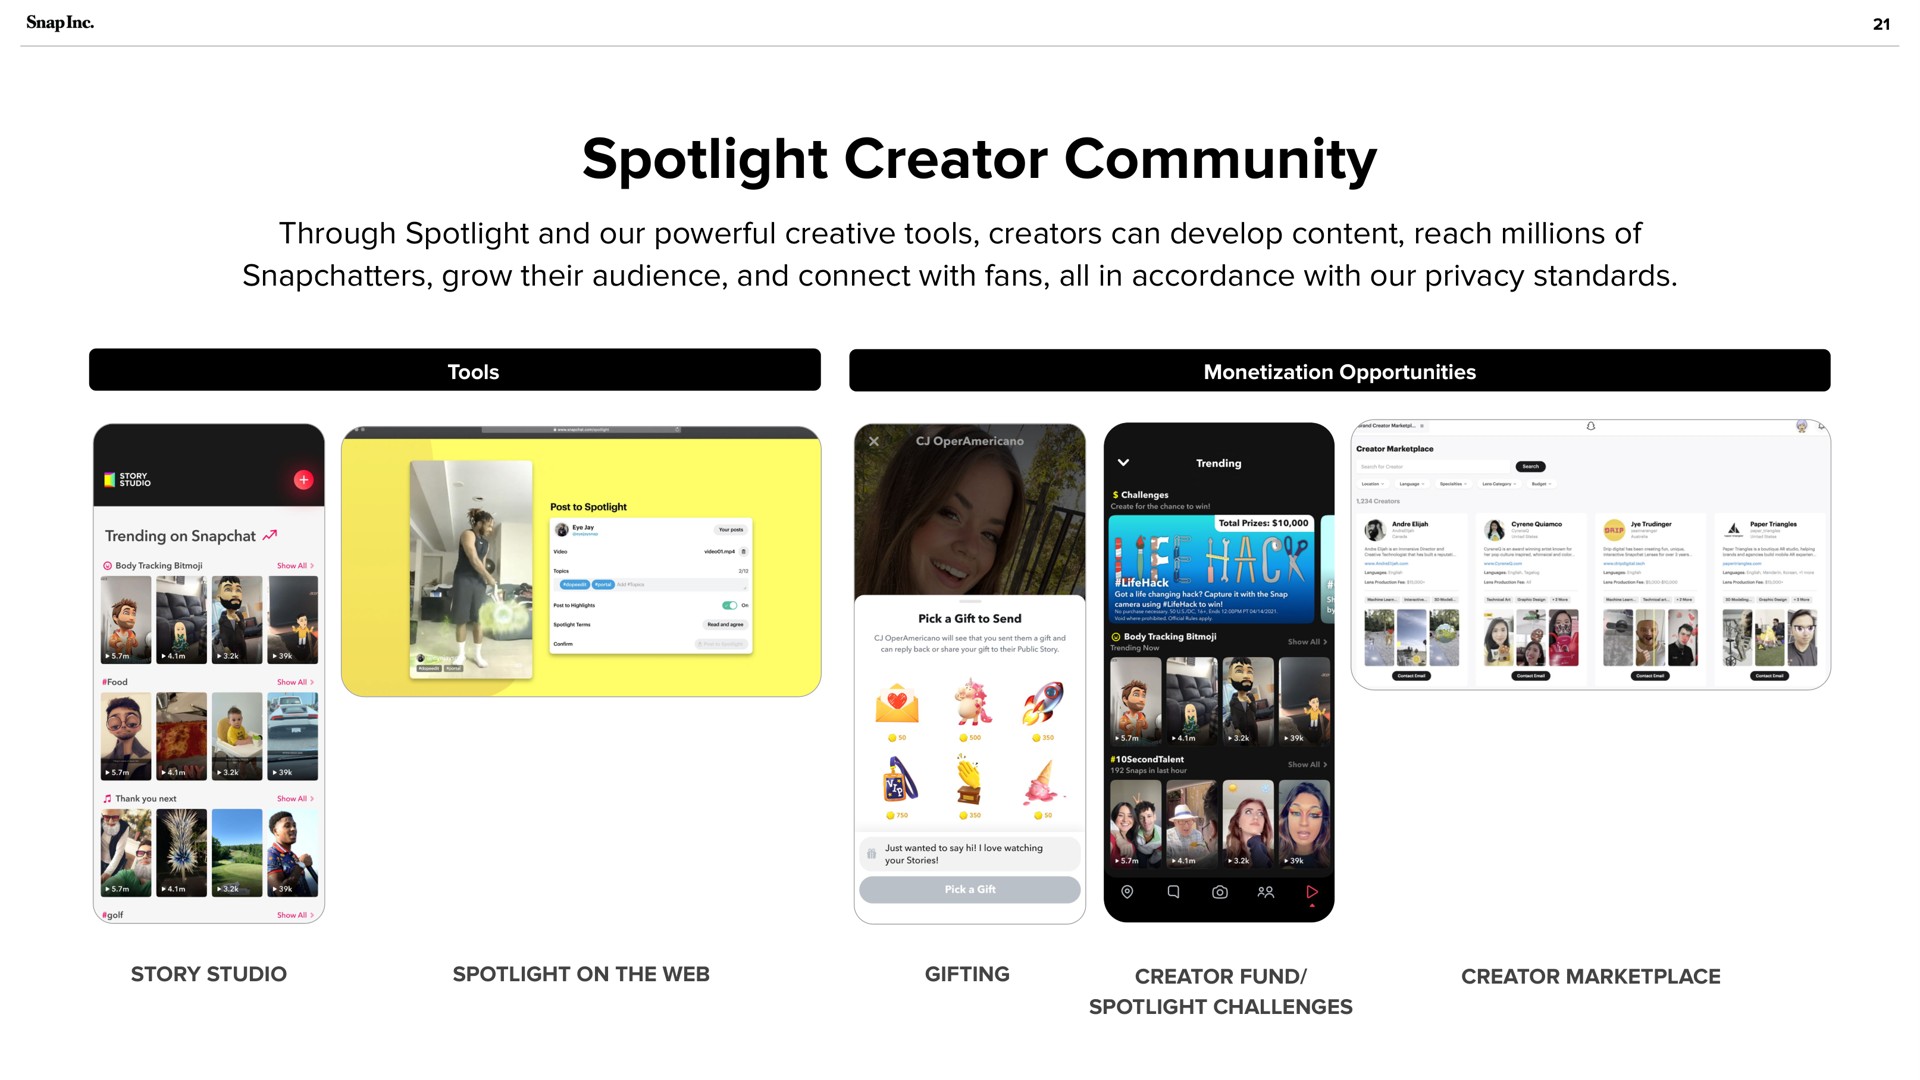 spotlight creator community rage pall aka i | Snap Inc